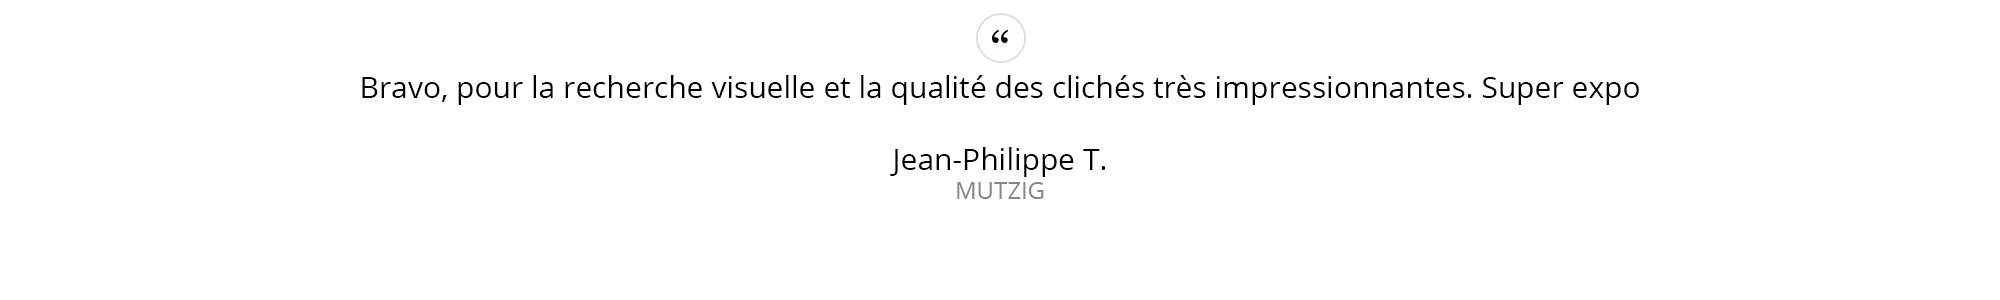 Jean-Philippe-T.---MUTZIG